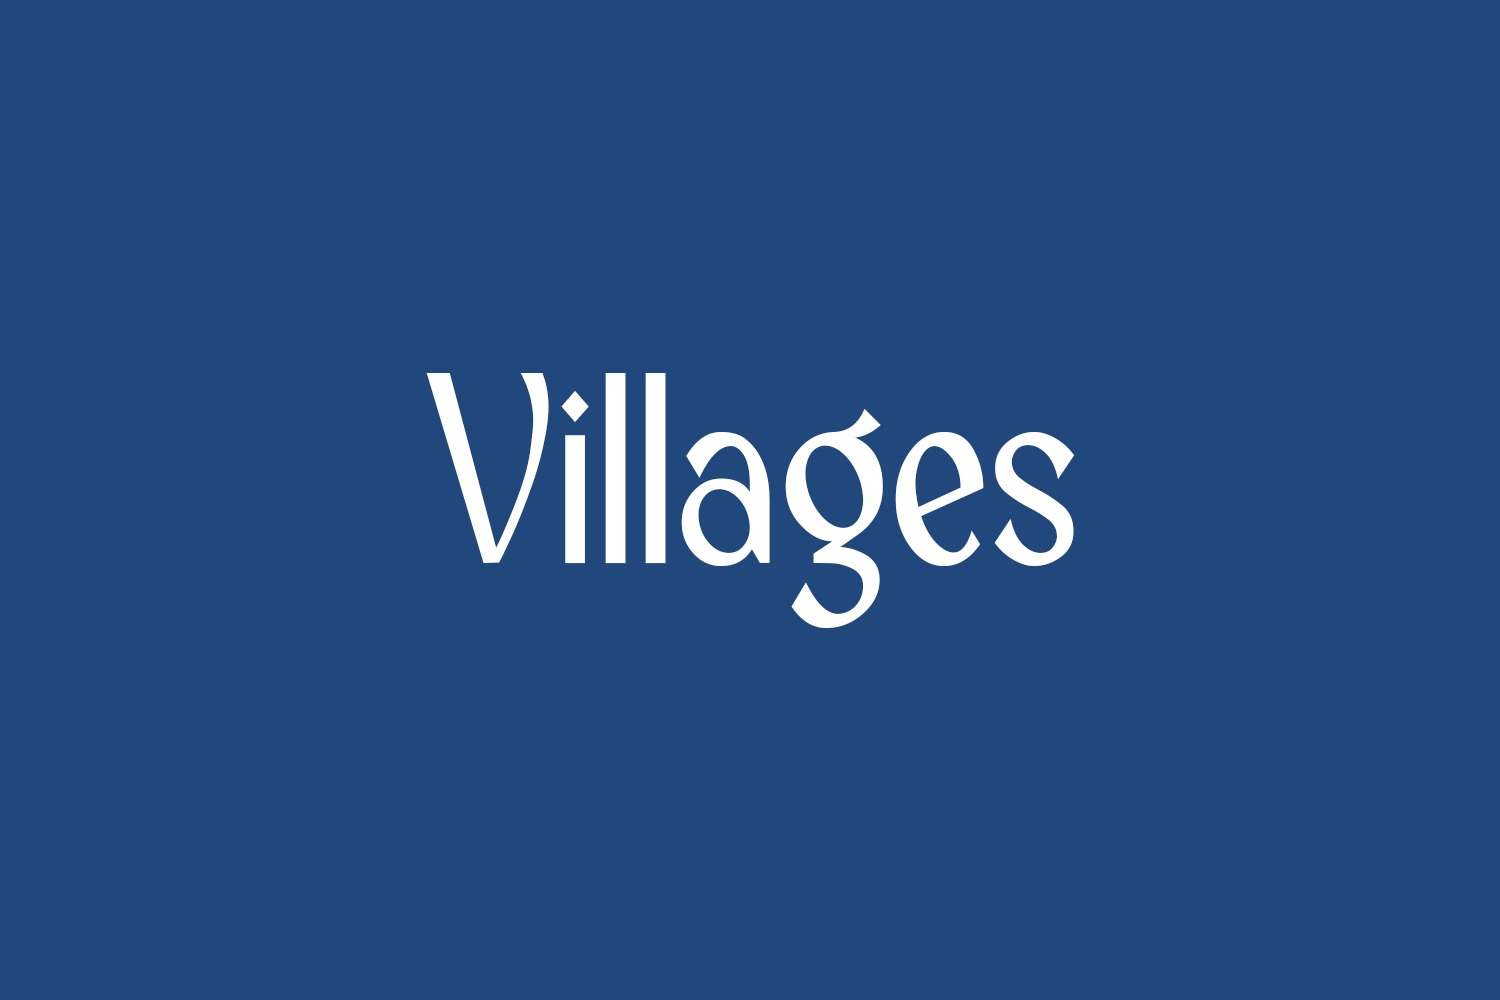 Villages Free Font